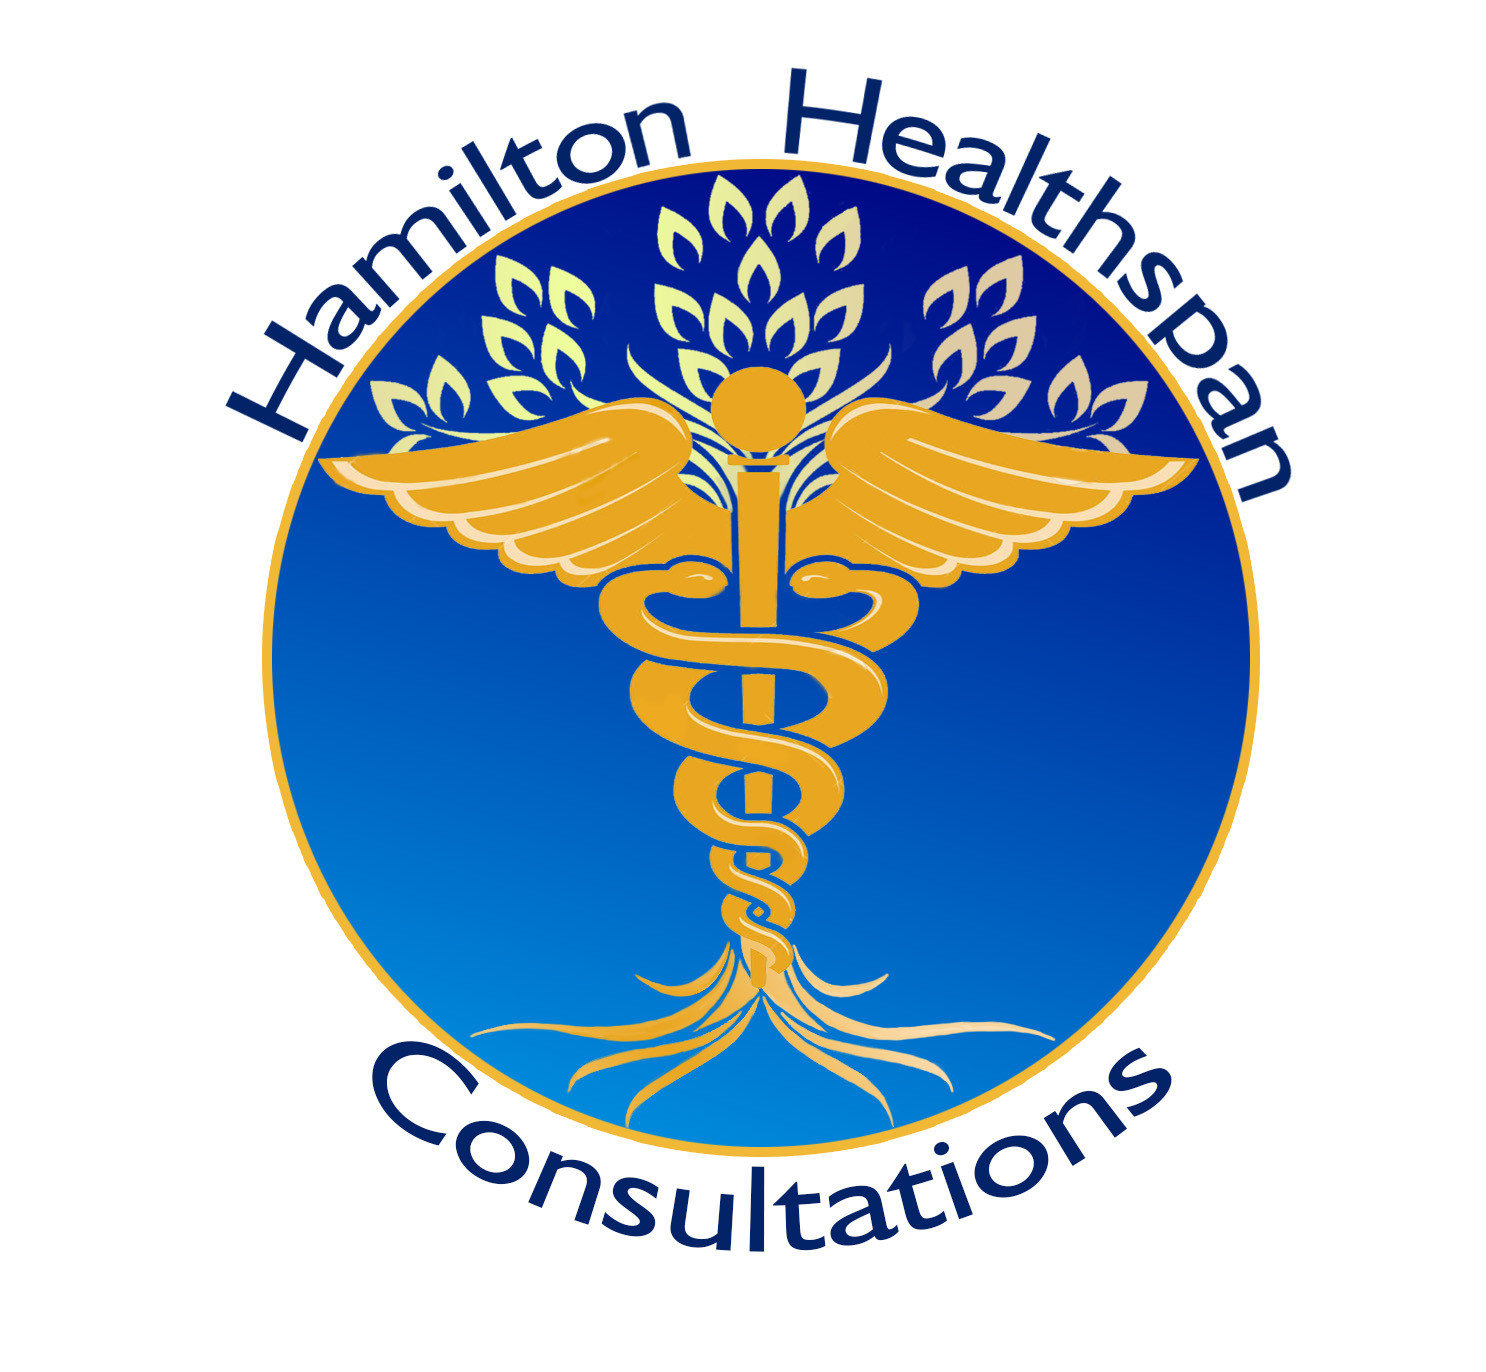 Hamilton Healthspan Consultations